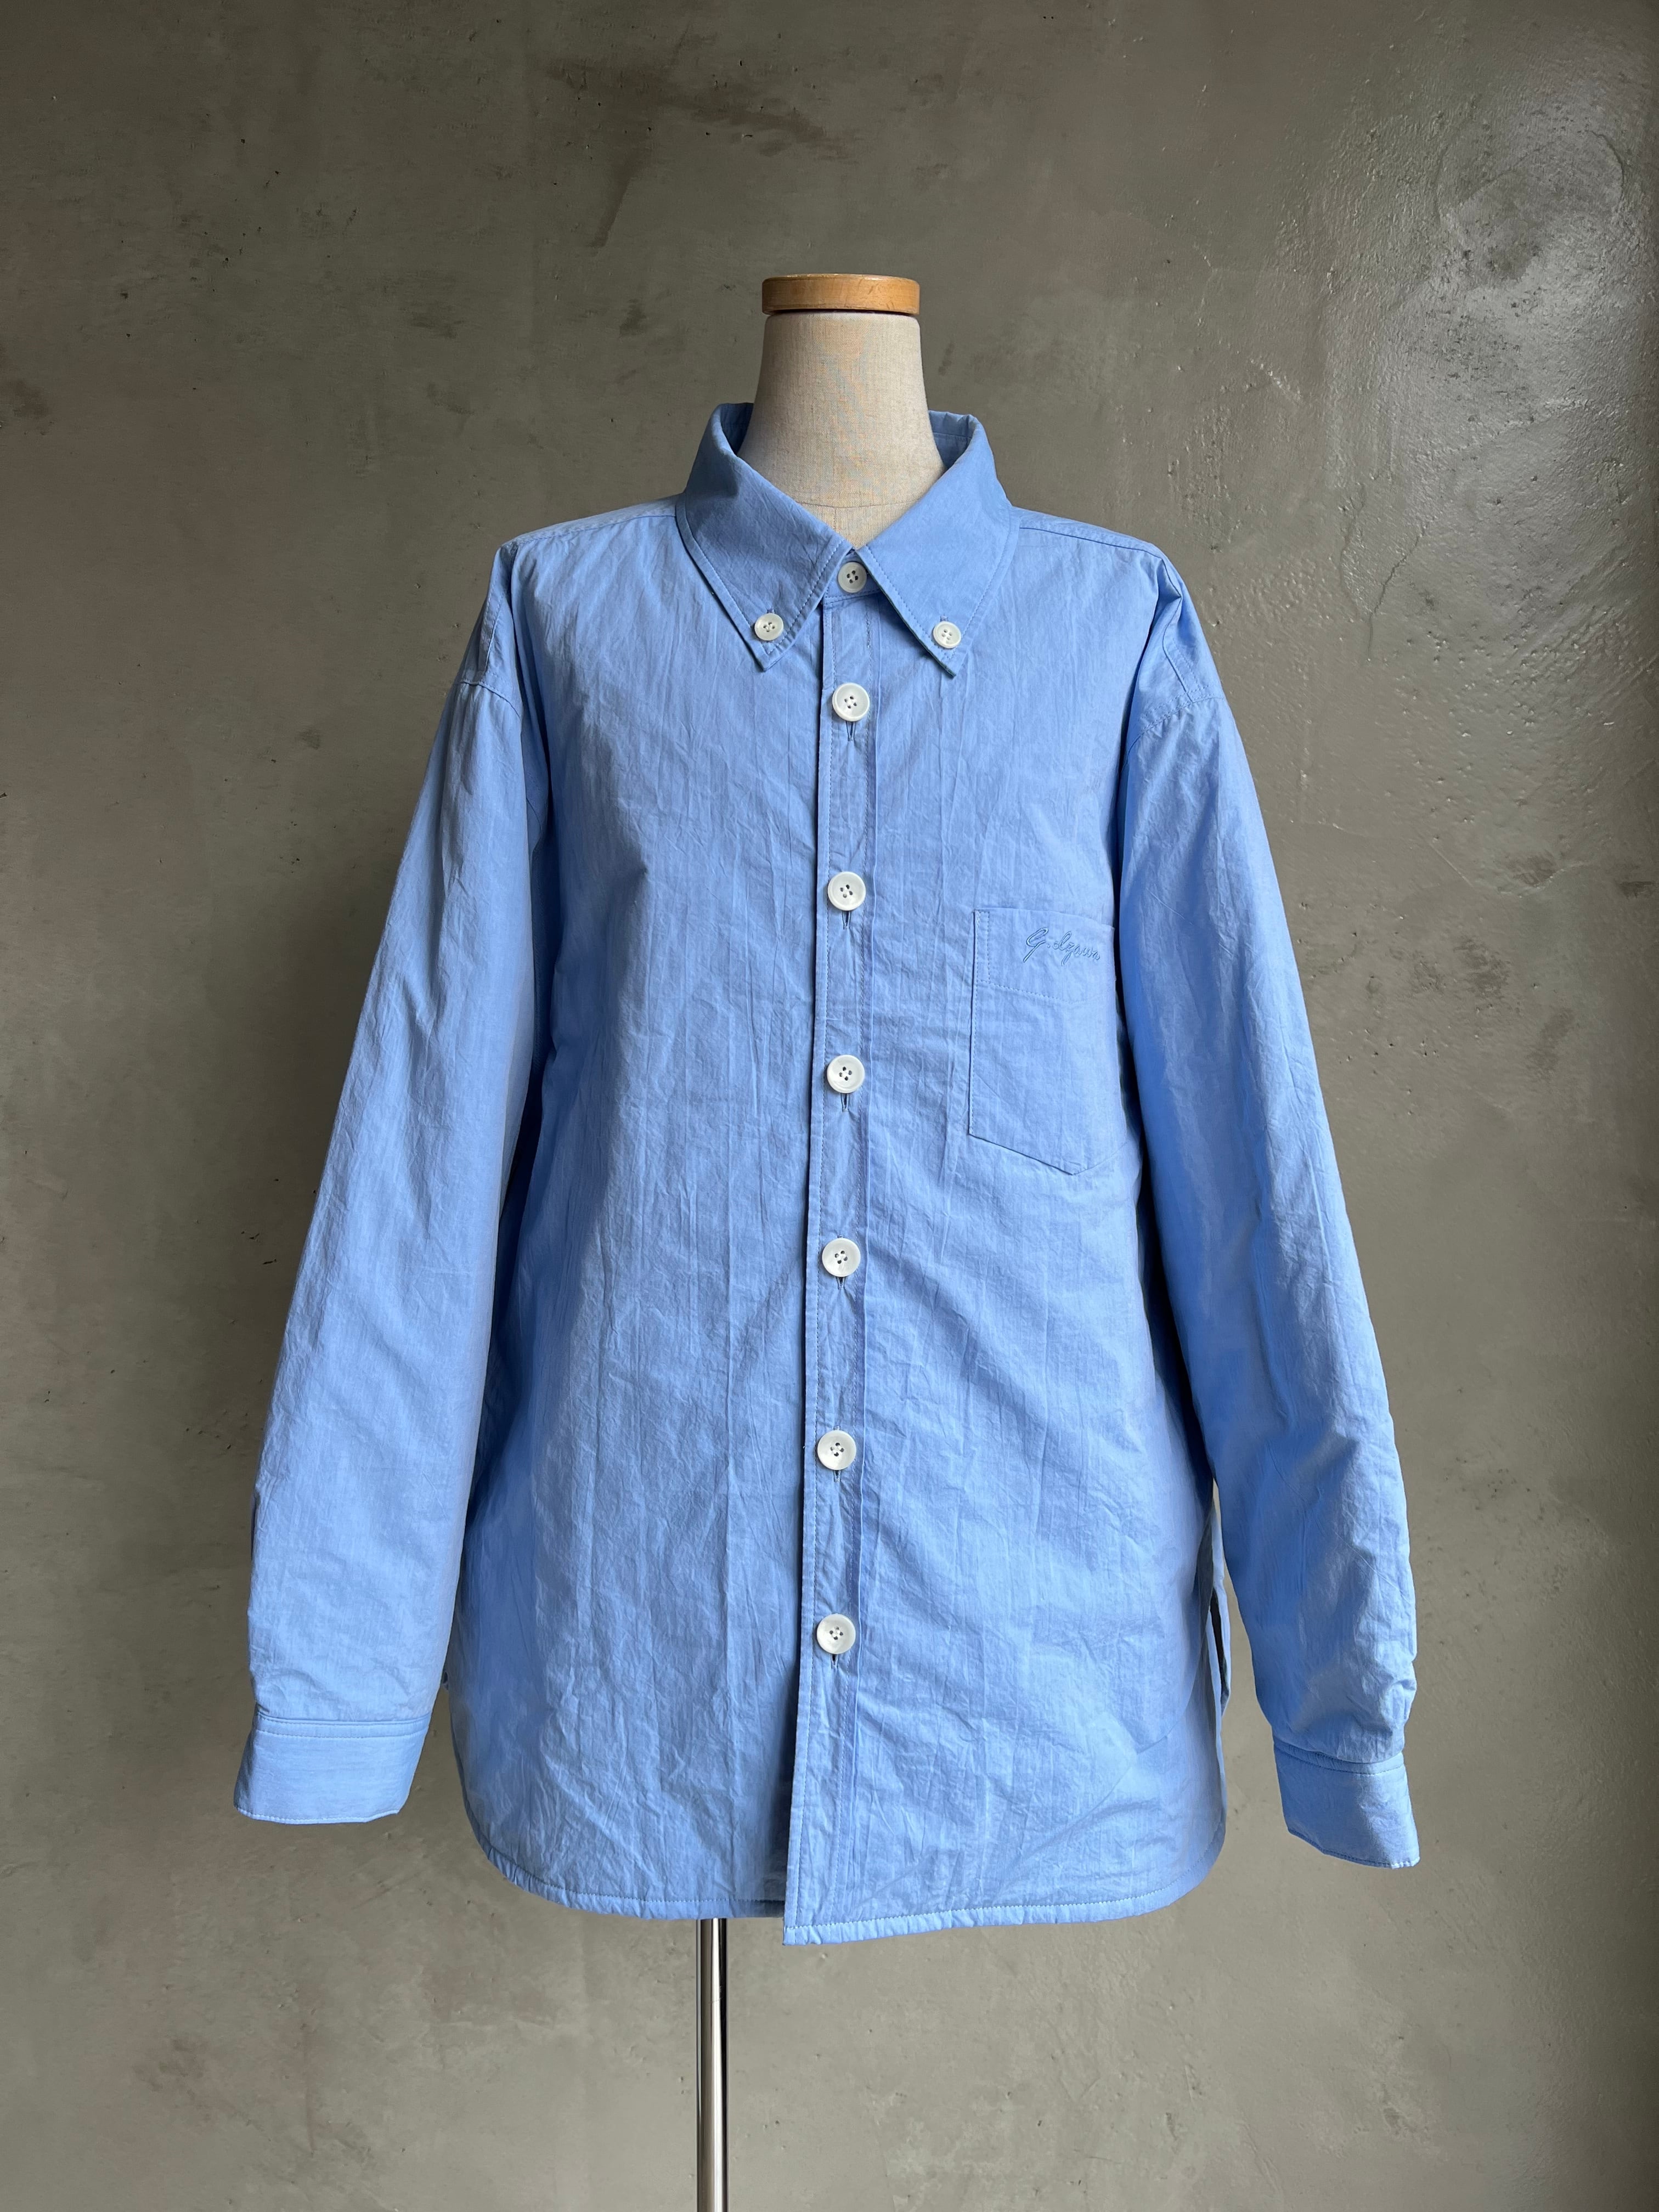 GEN IZAWA / Quilting BD shirt jacket 